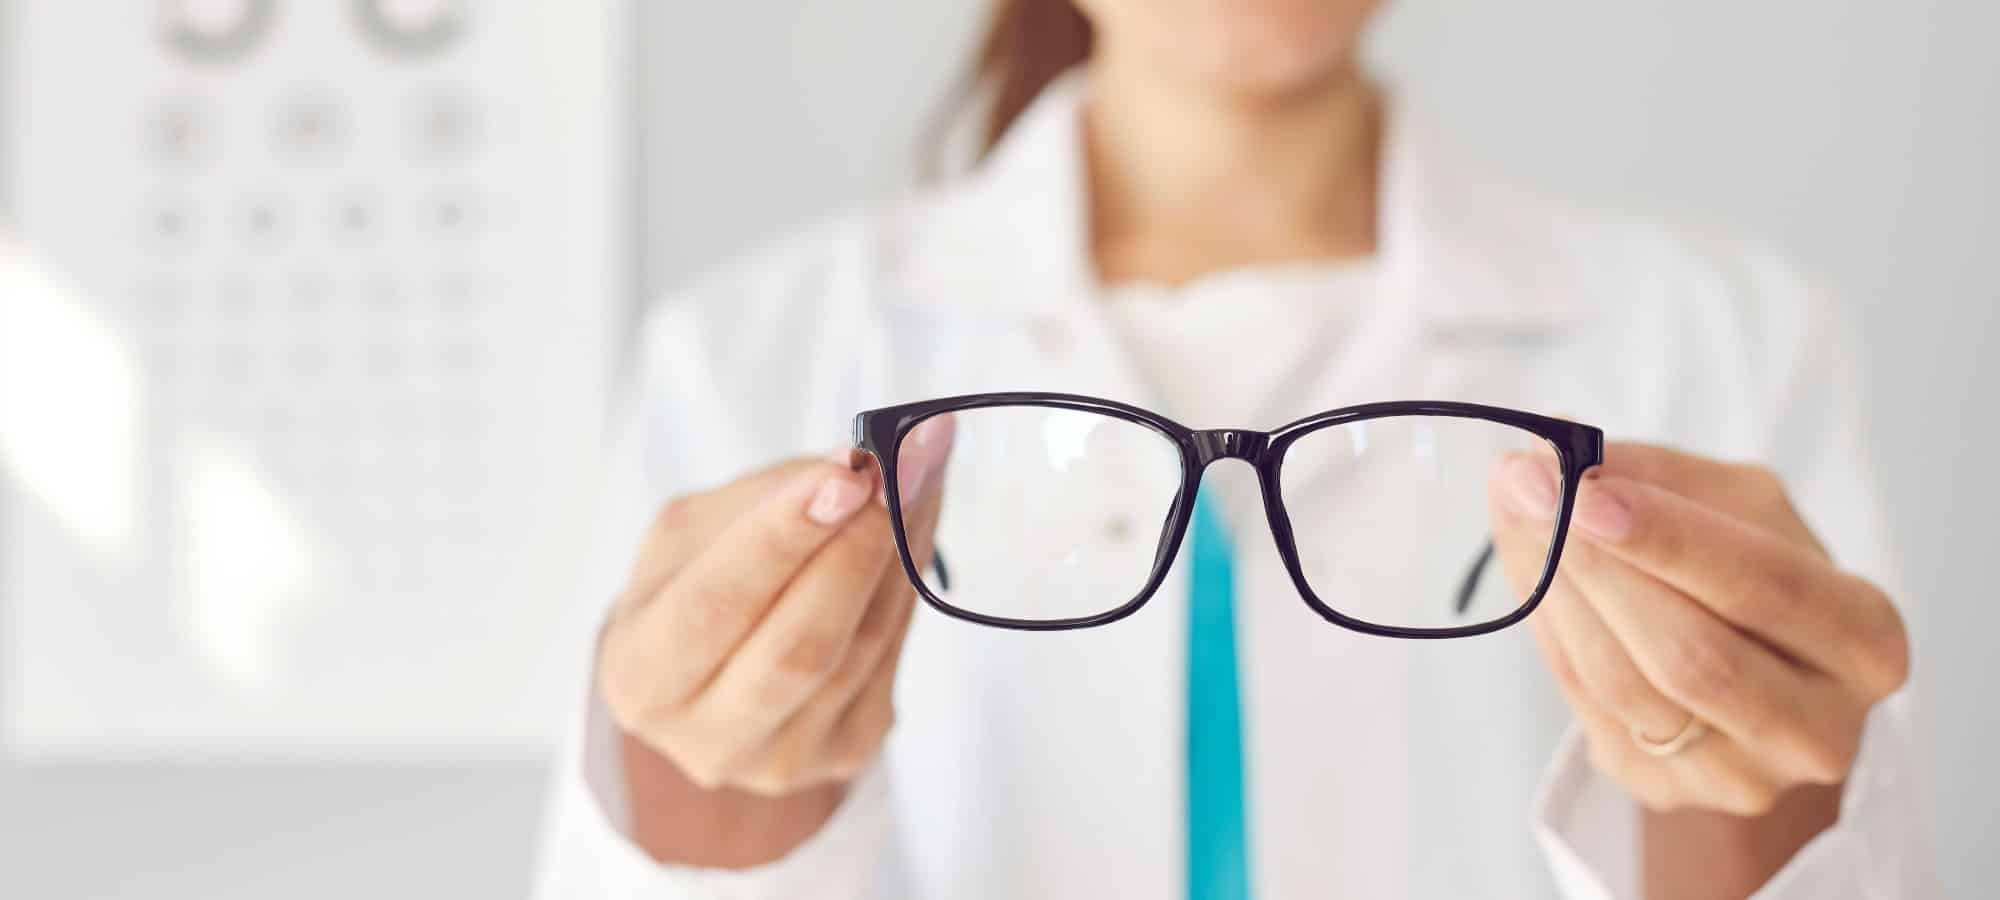 Eyeglass Prescription Abbreviations to Know